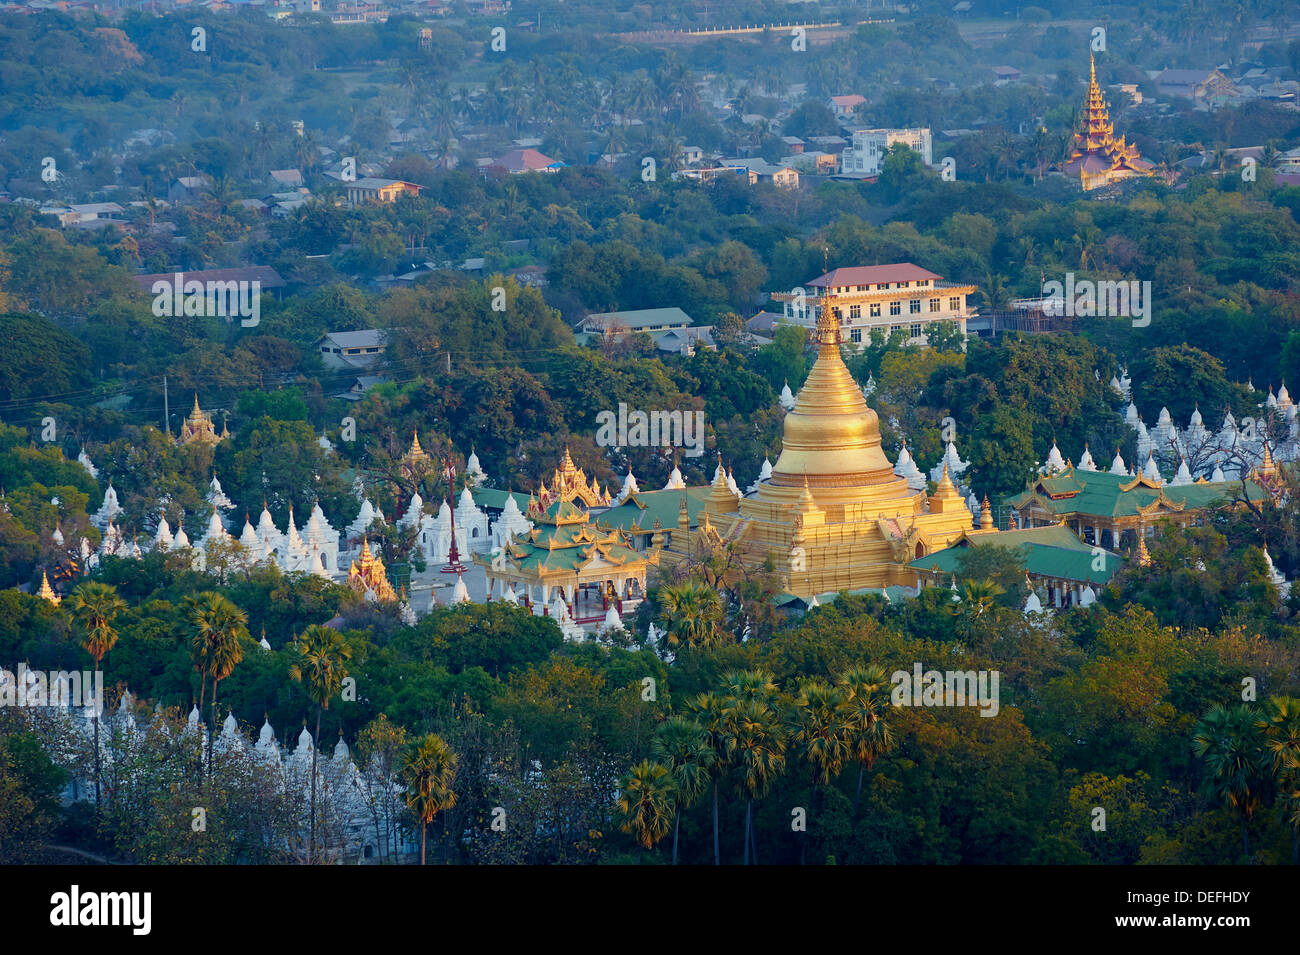 Paya Sandamuni, temple and monastery, Mandalay, Myanmar (Burma), Asia Stock Photo